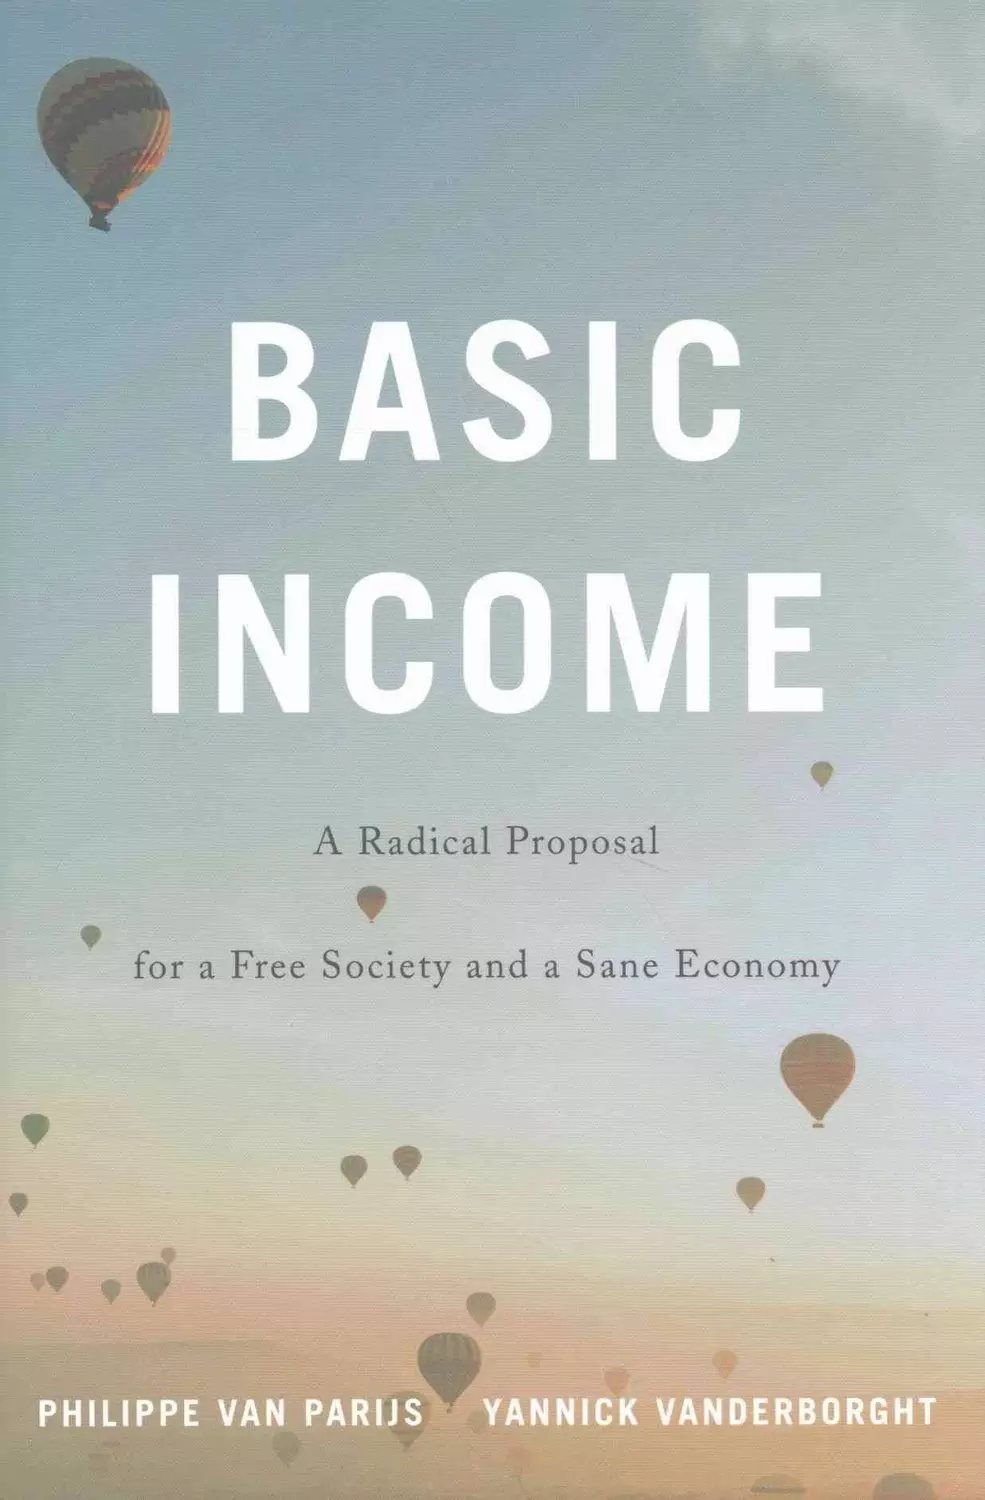 Basic Income by van Parijs and Vanderborght.